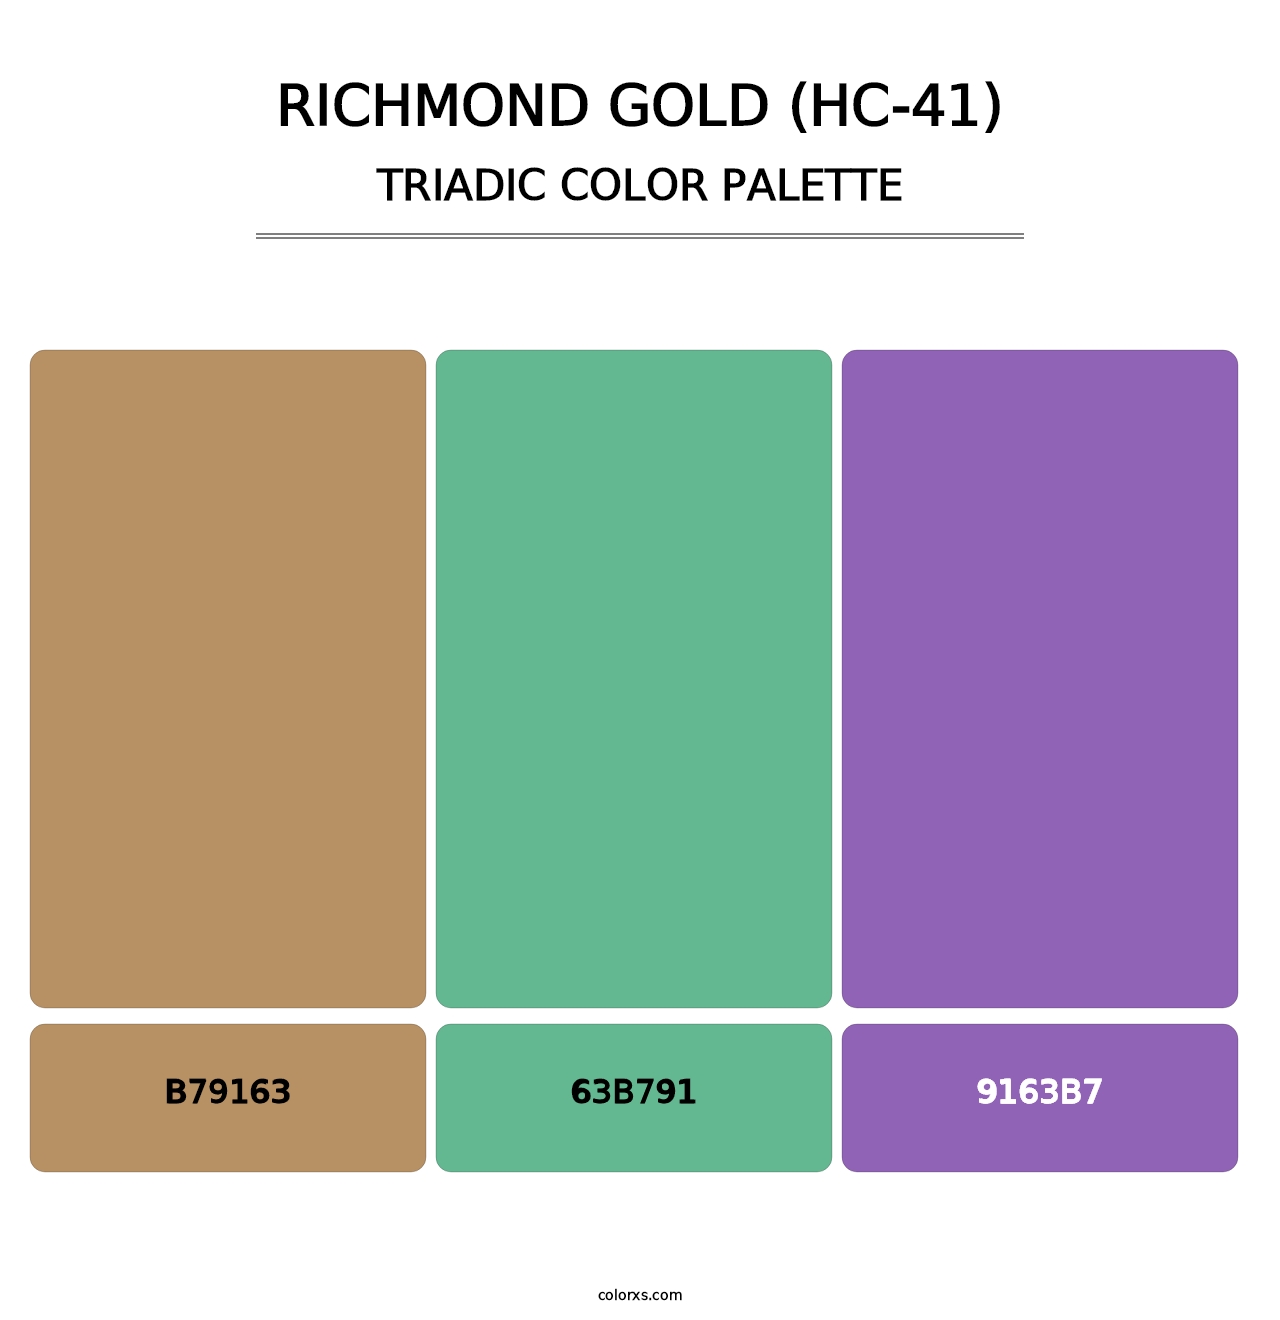 Richmond Gold (HC-41) - Triadic Color Palette